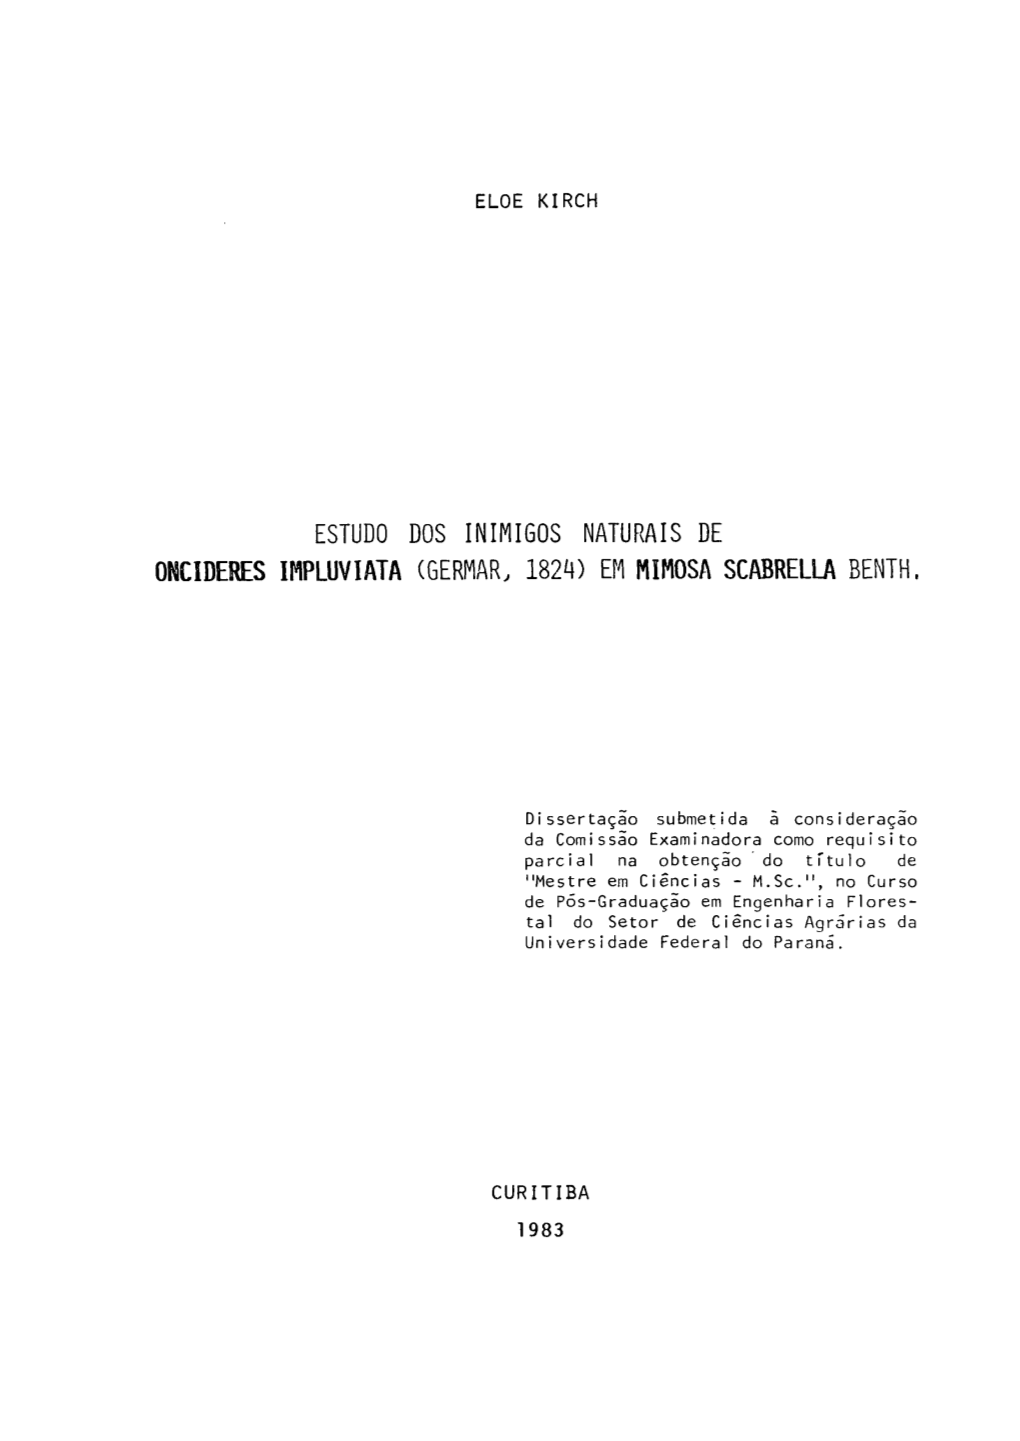 Estudo Dos Inimigos Naturais De Oncideres Impluviata (Germar, 1824) Em Mimosa Scabrella Benth